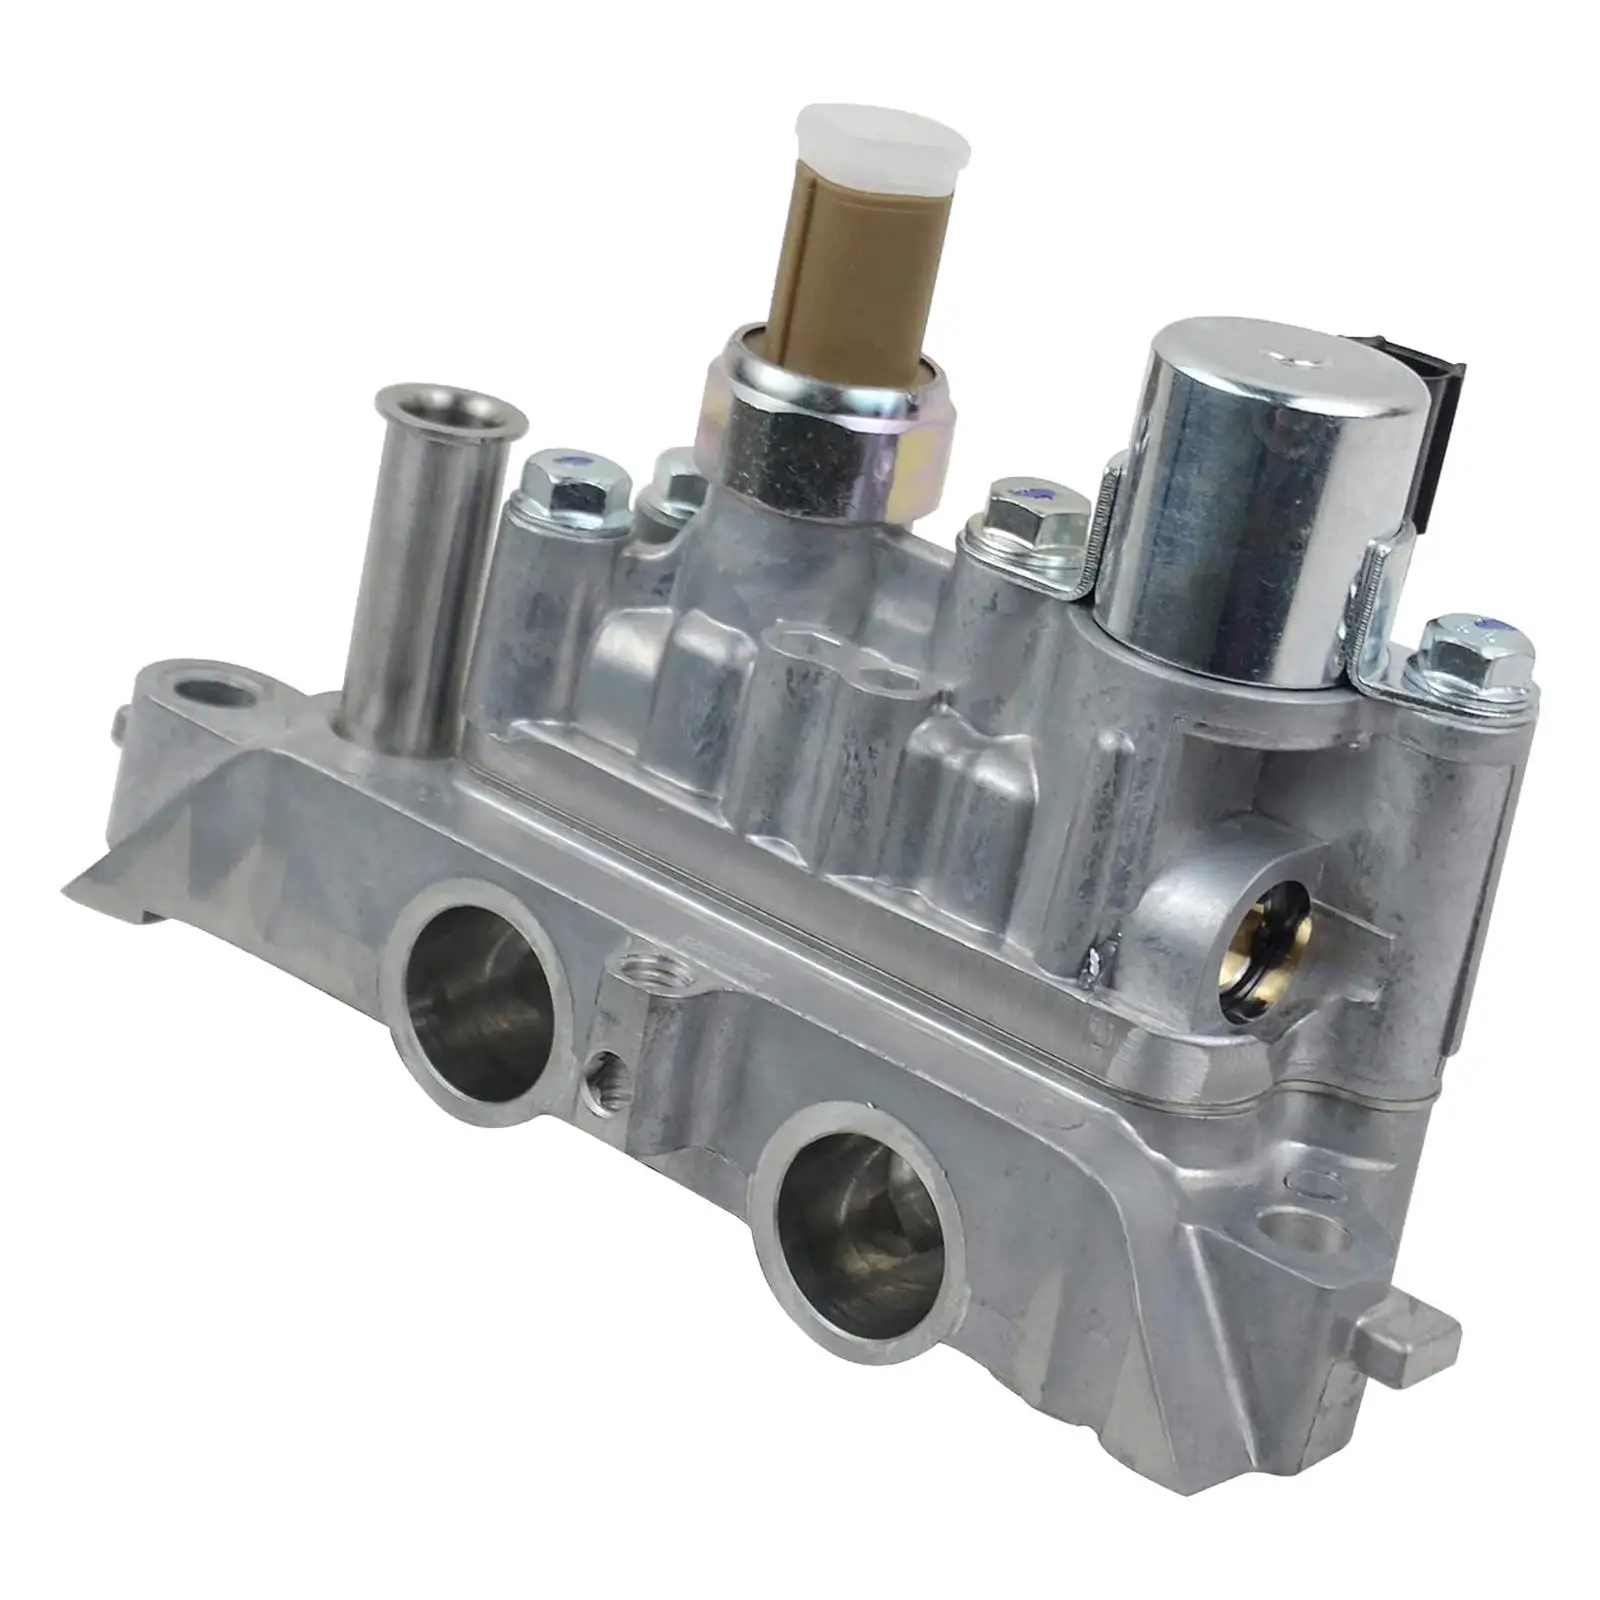 Auto Engine Oil Control Valve Automotive Valvetrain Interior Parts Mechanical Stability 15810-R70-A04 Fit for Acura RDX 13-15